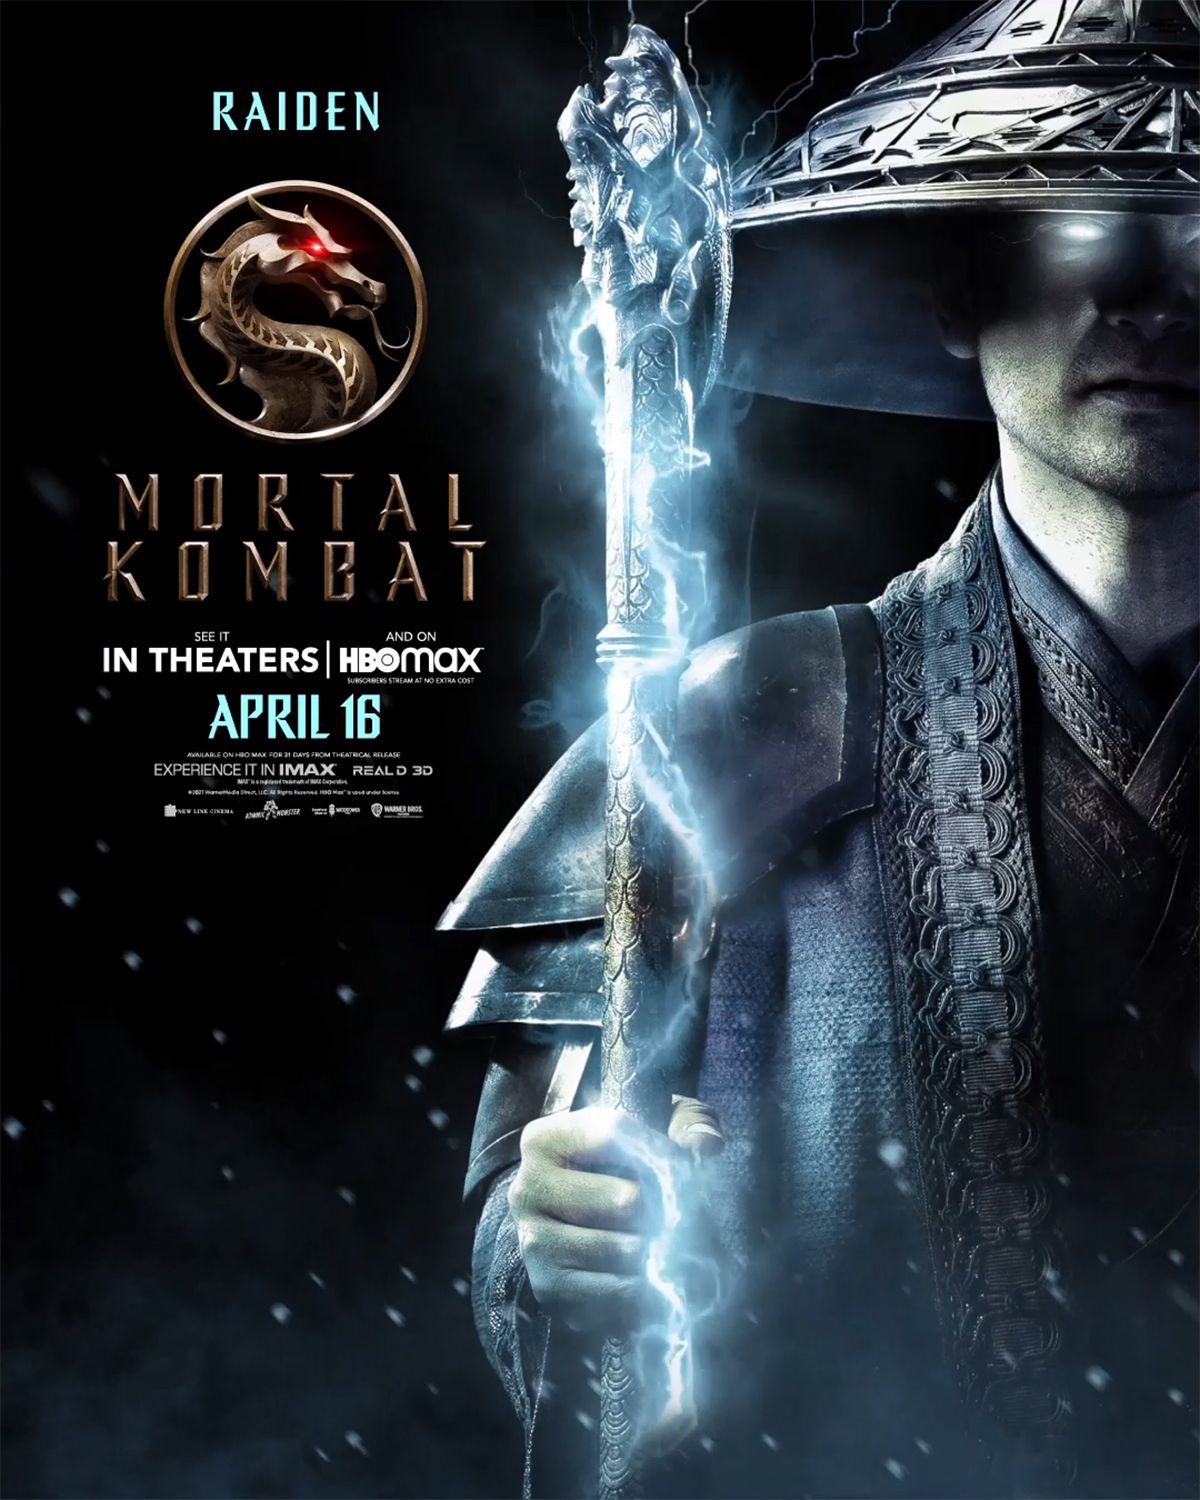 Raiden character poster for Mortal Kombat movie